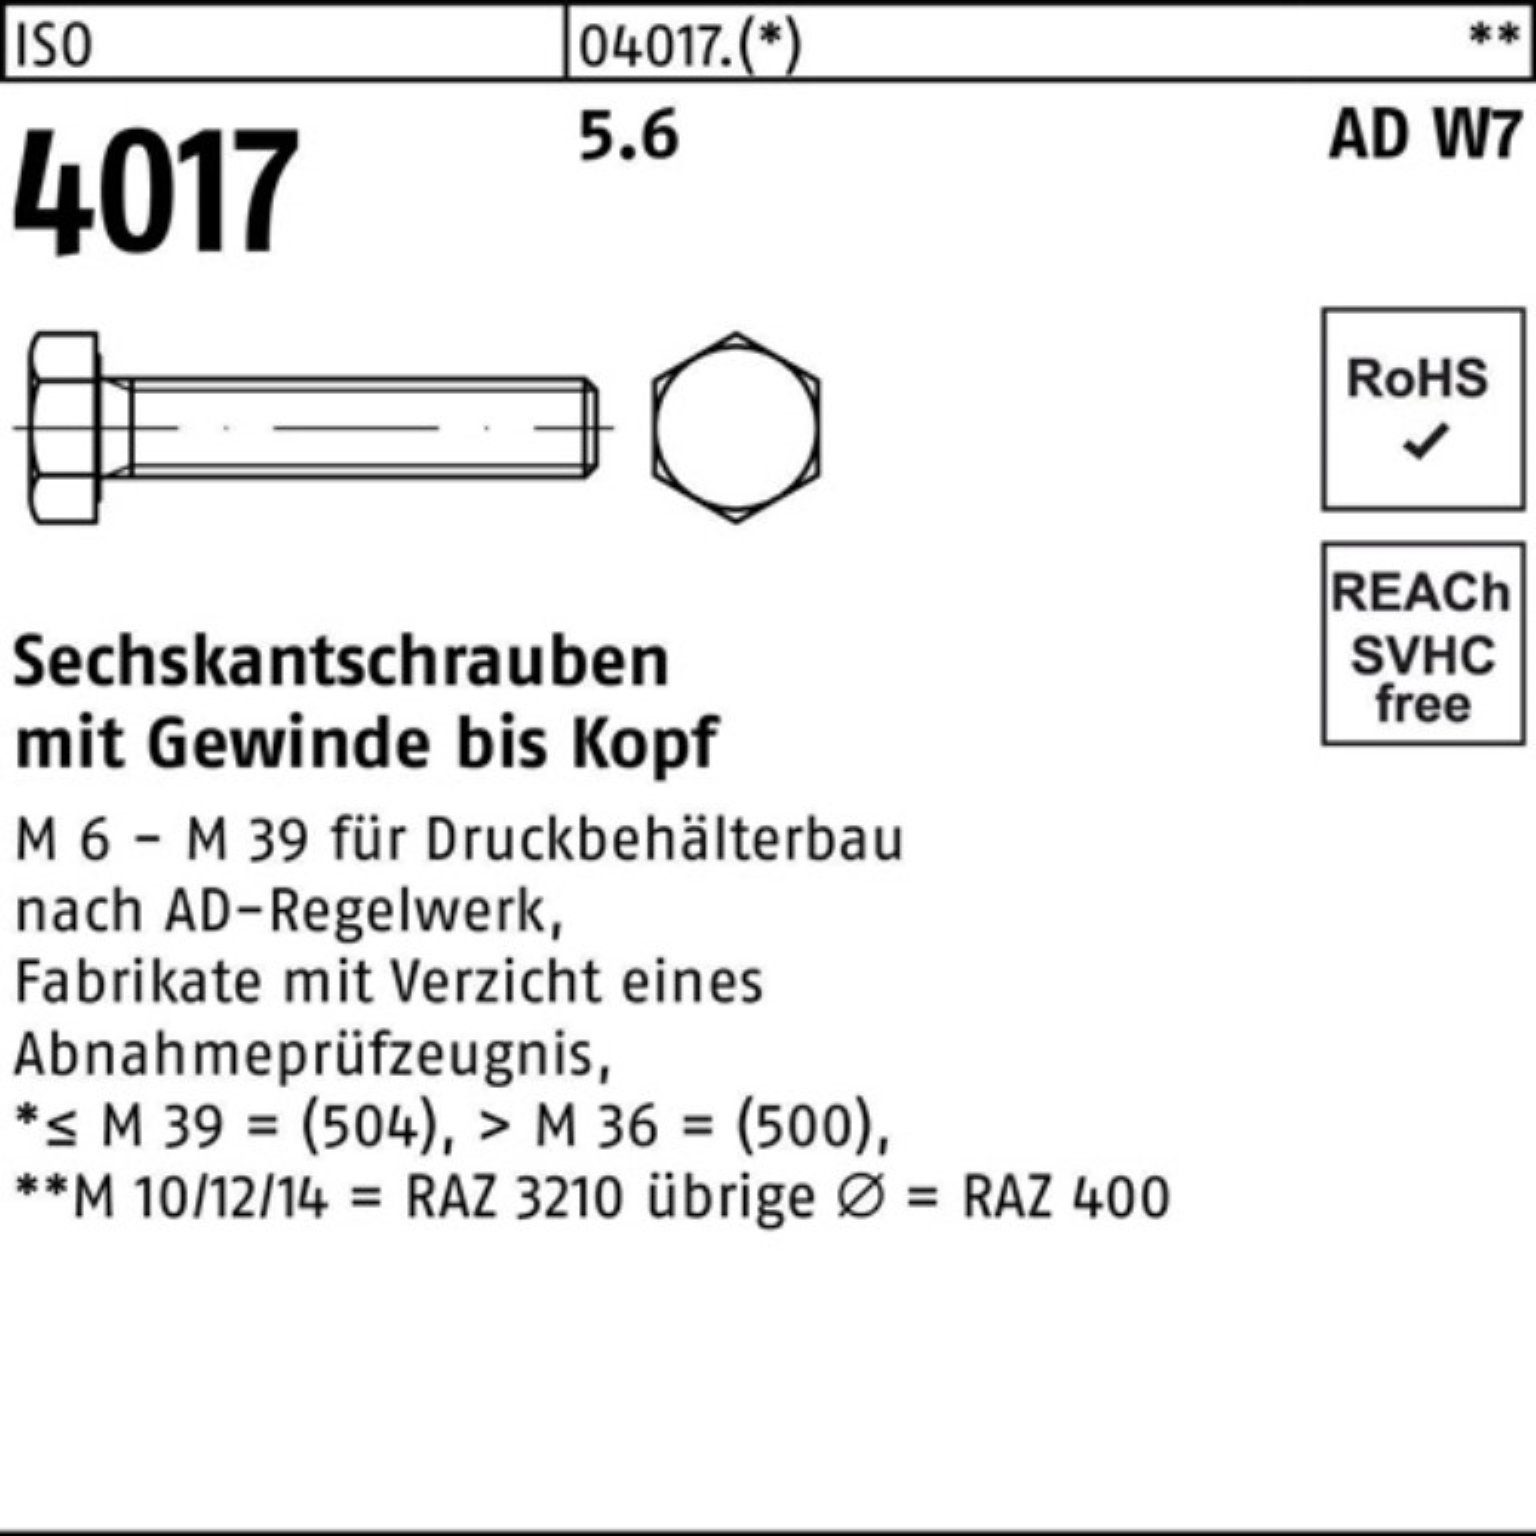 Sechskantschraube ISO 30 Stück Pack Sechskantschraube AD Bufab M12x VG 5.6 4017 100 W7 100er